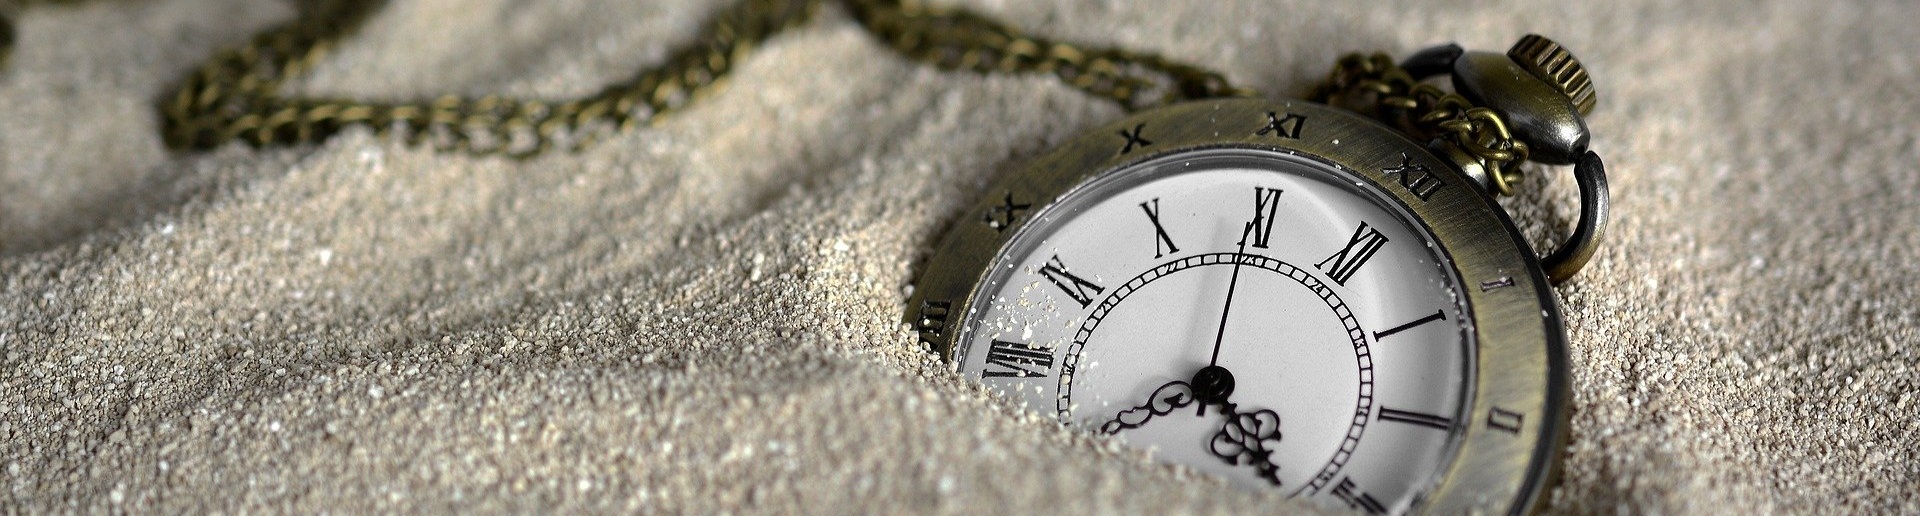 pocket watch in sand